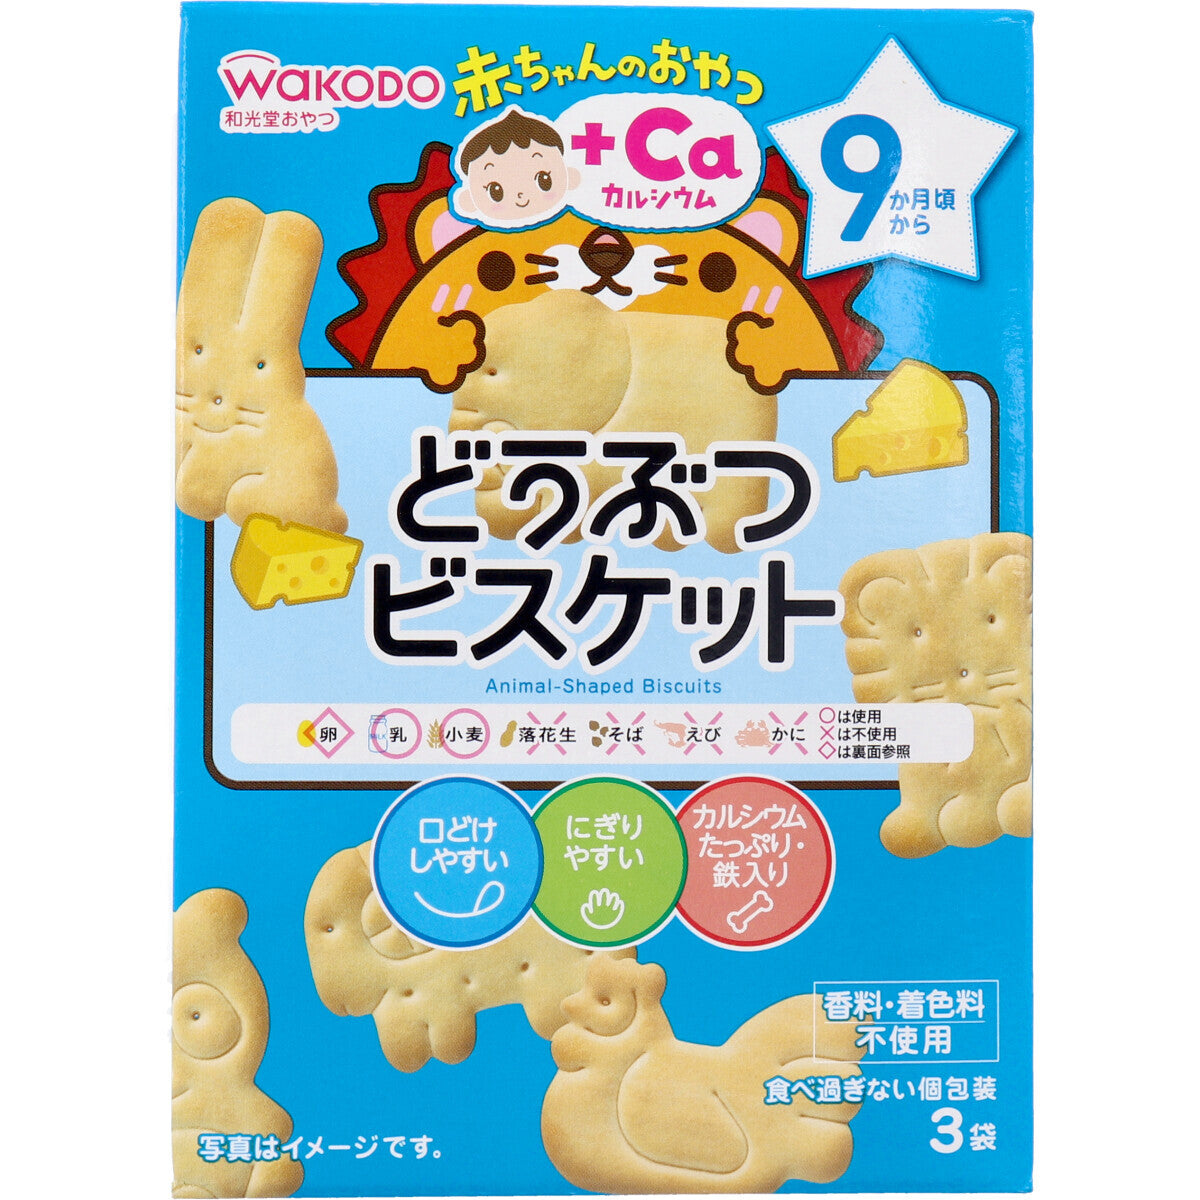 Wakodo - Baby Snacks + Ca Animal Shaped Biscuits 11.5g x 3 bags